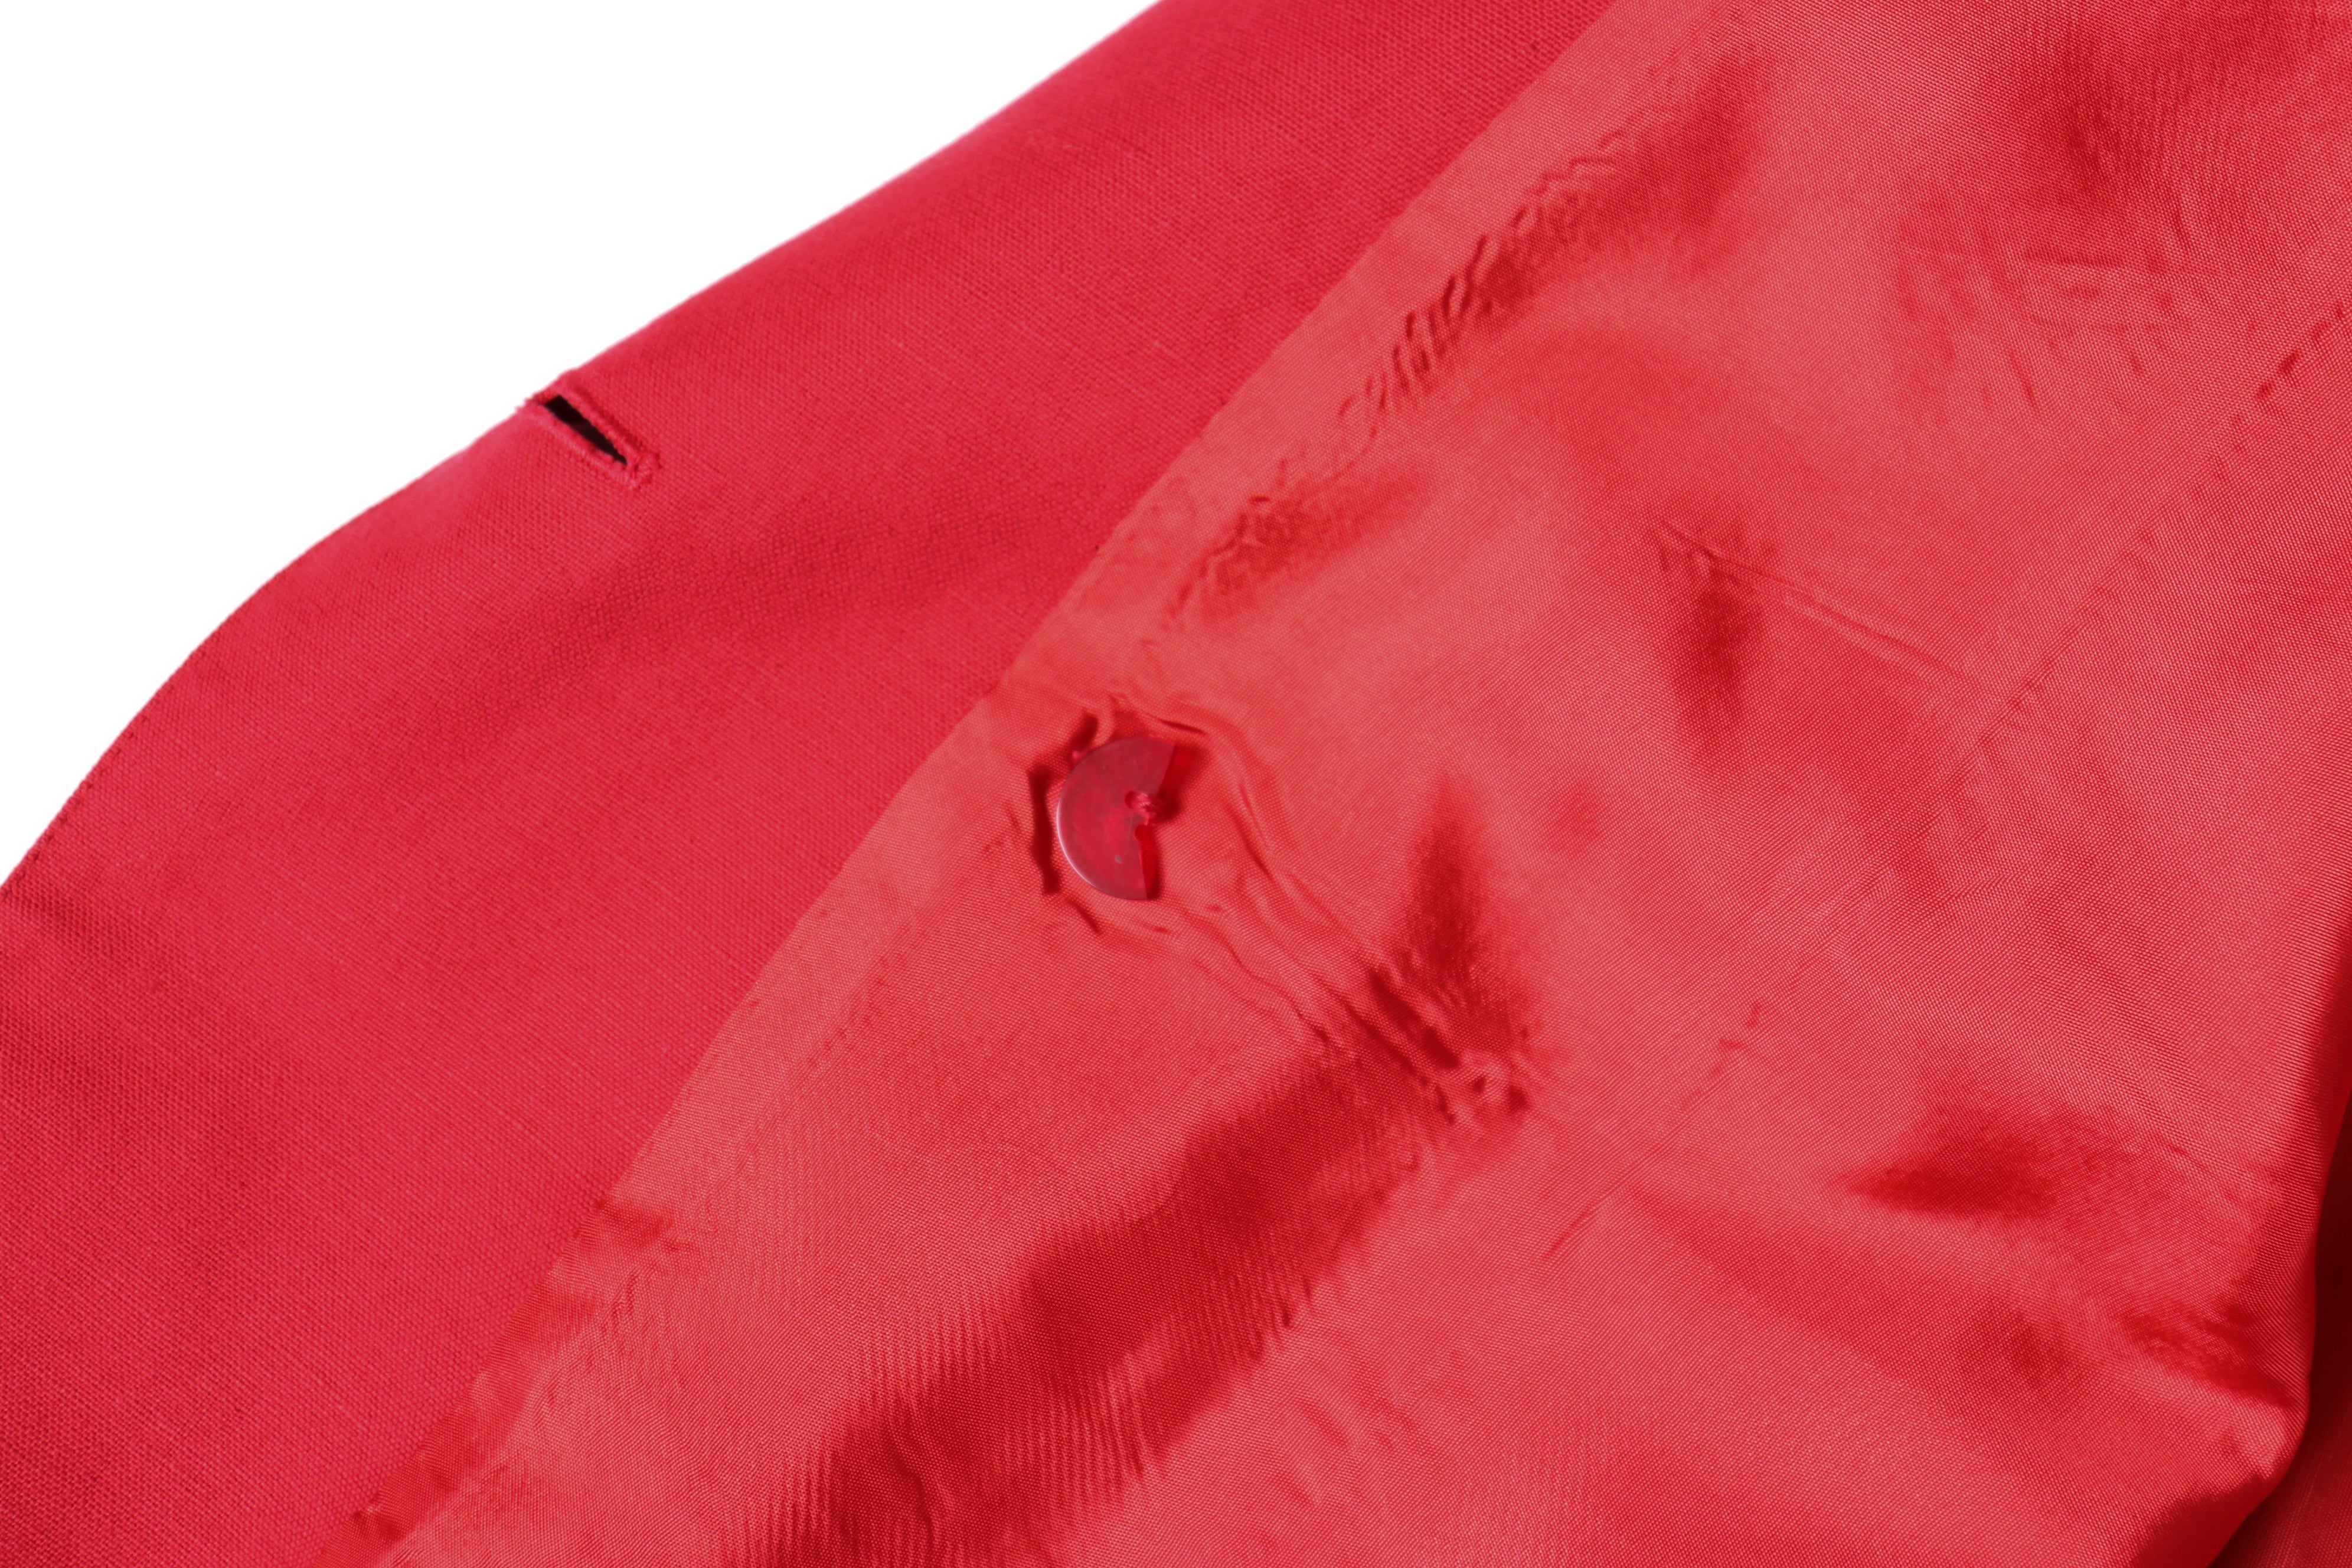 Red Blazer Jacket Wool - Cotton / Linen - Vintage - S / UK 10